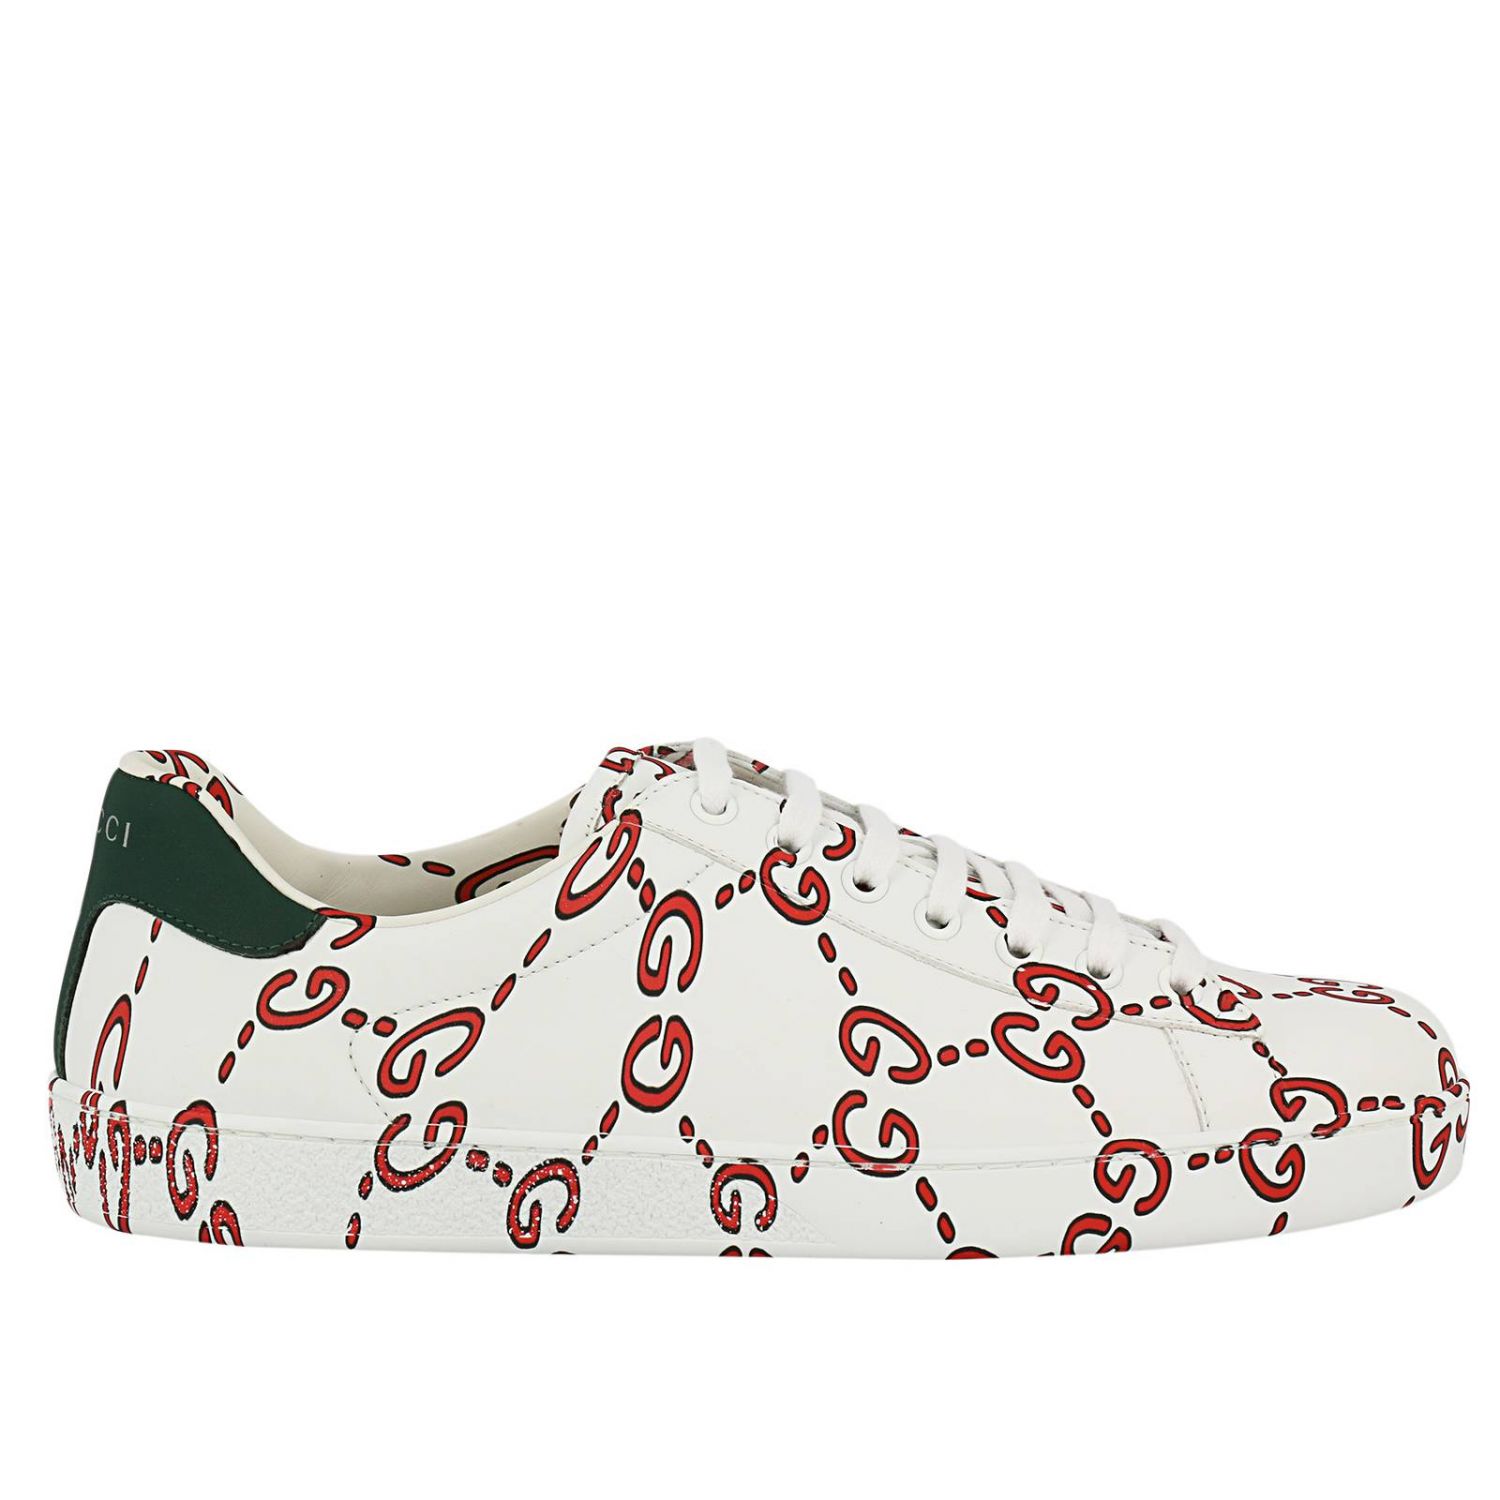 GUCCI: Shoes men | Sneakers Gucci Men White | Sneakers Gucci 497094 ...